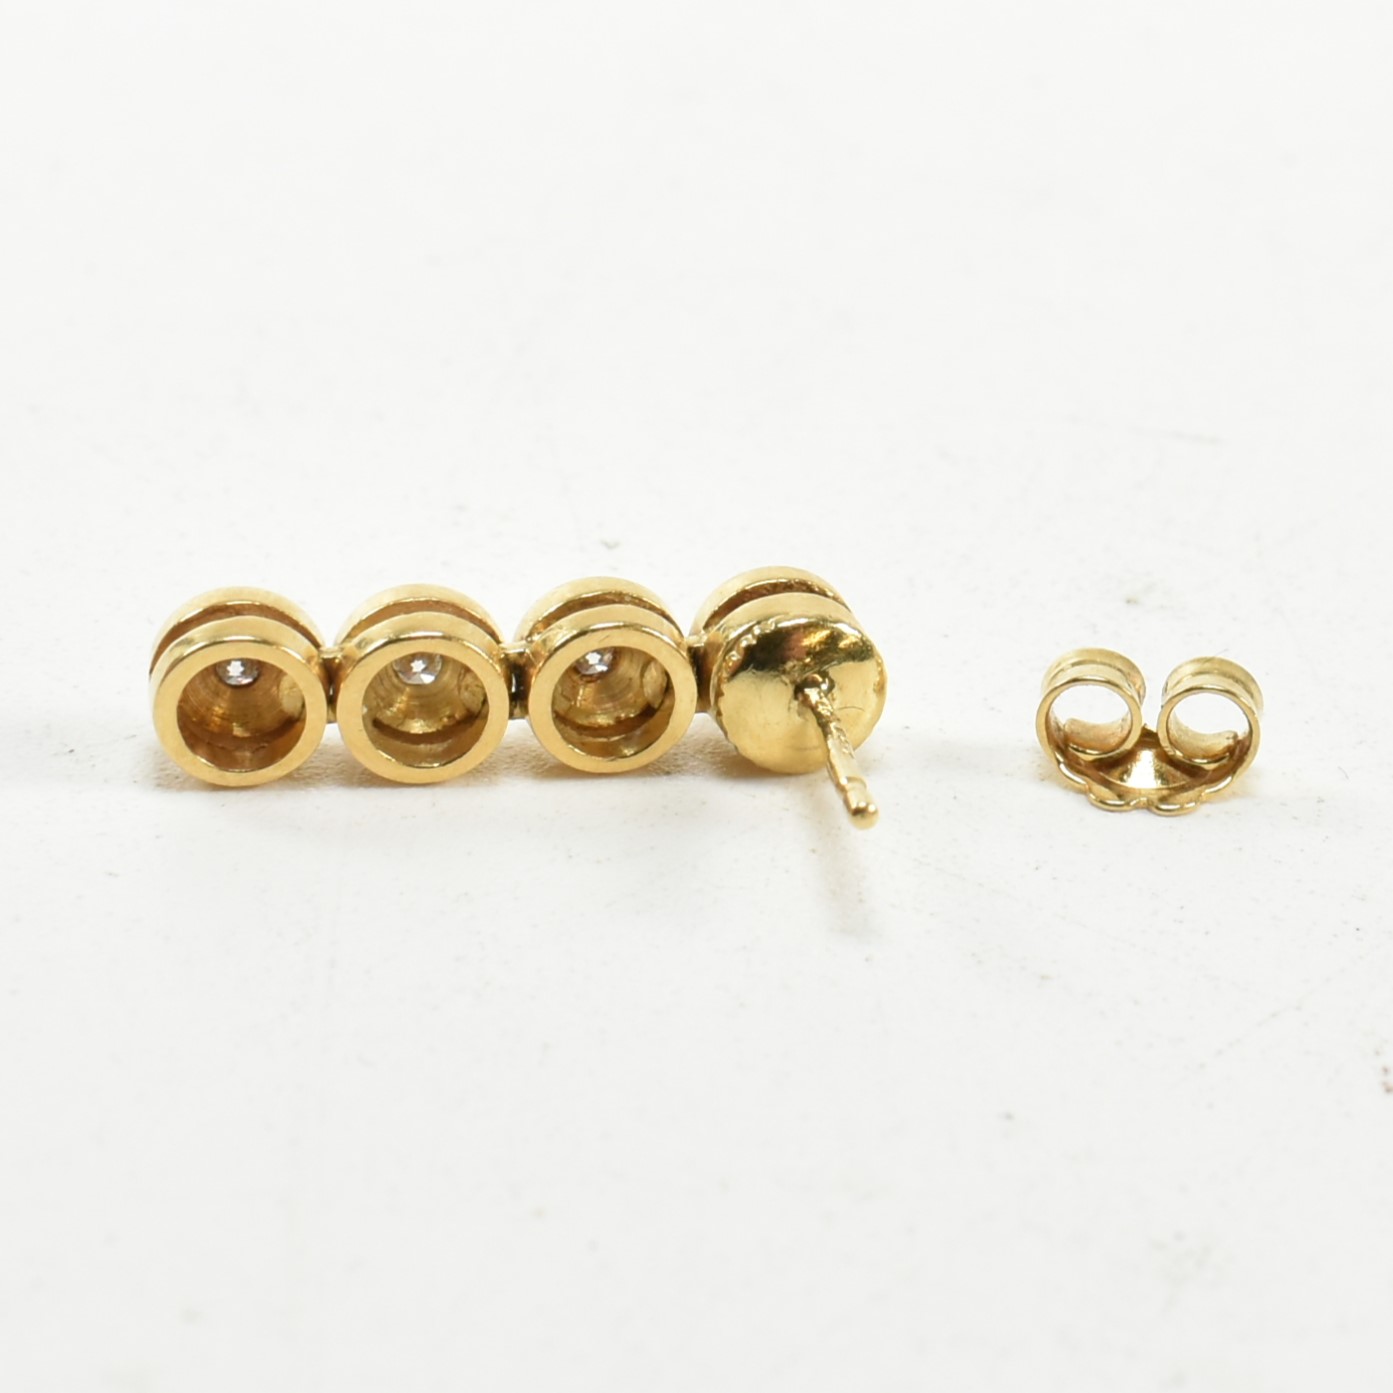 PAIR OF 18CT GOLD & DIAMOND PENDANT EARRINGS - Image 4 of 4